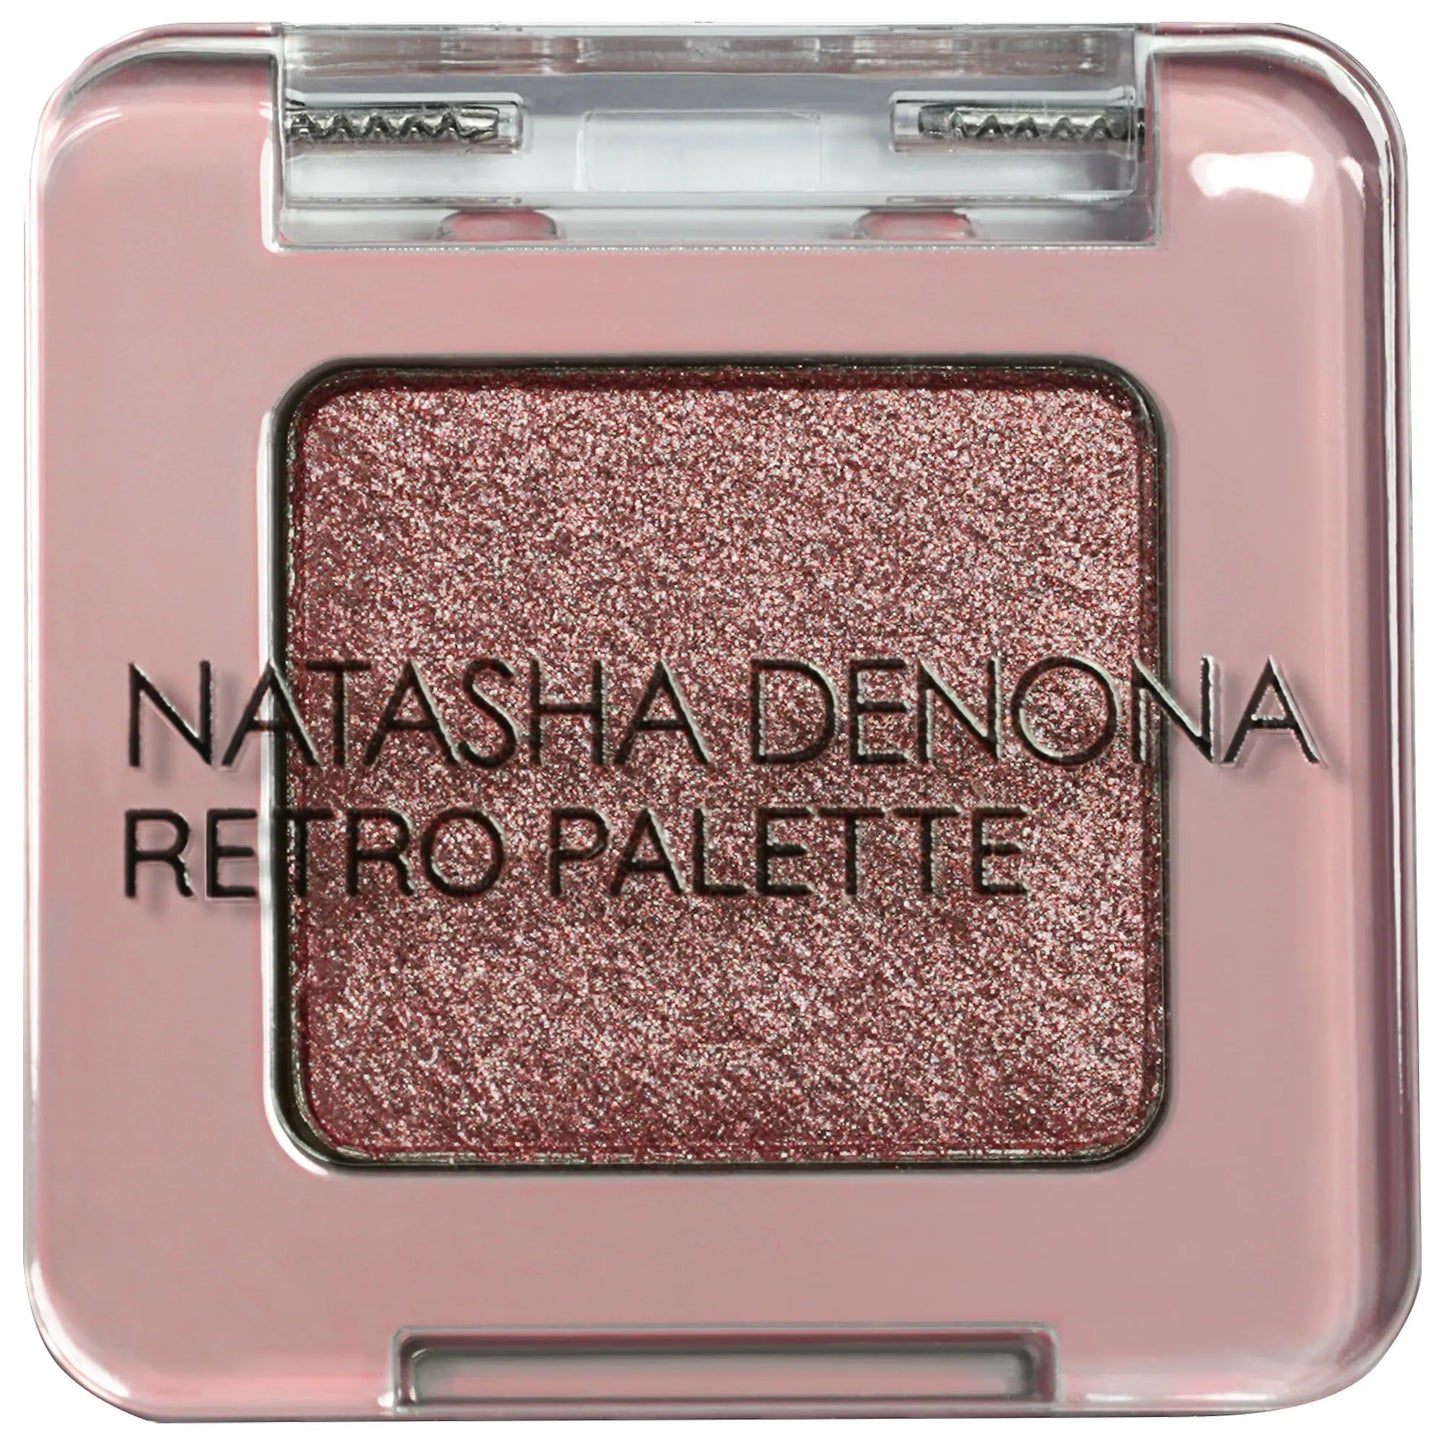 Natasha Denona | Retro Palette Eyeshadow trial size in shade Helio